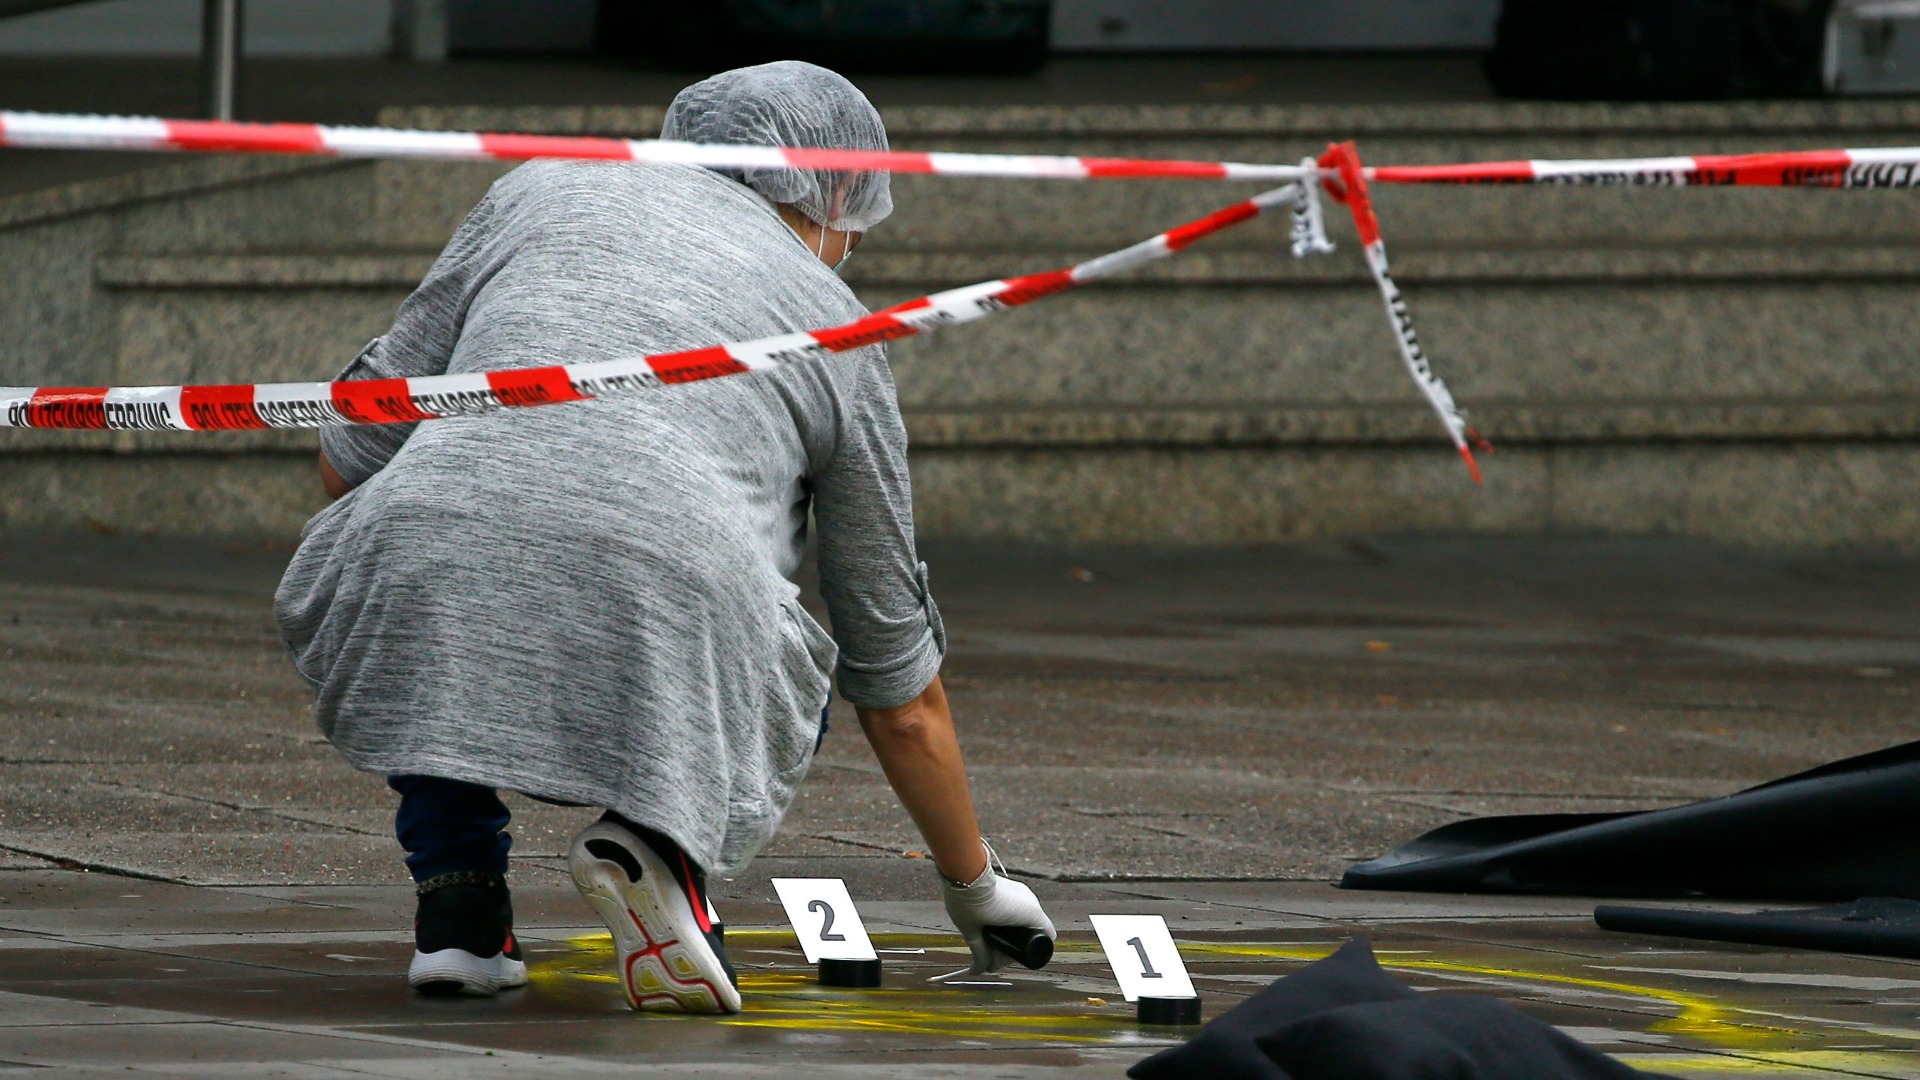 El atacante de Hamburgo actuó por "motivos religiosos" o por problemas psiquiátricos